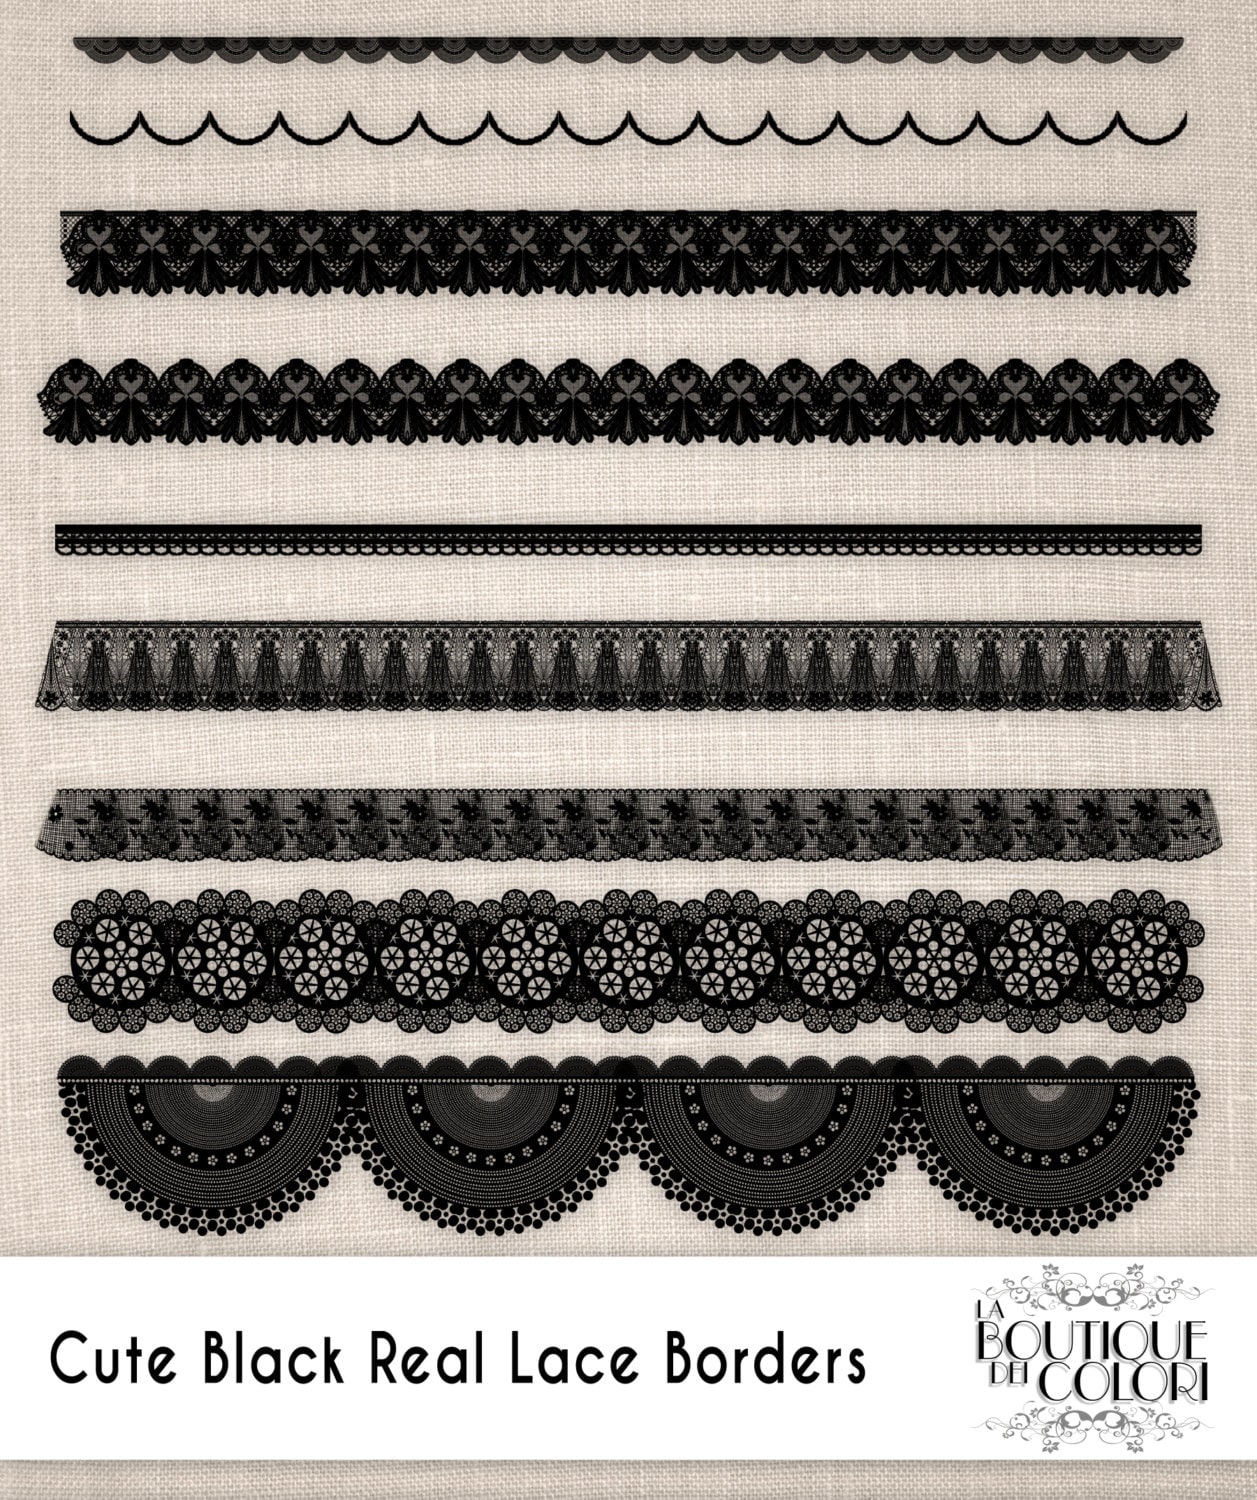 Lace Border Clip Art, Digital Clipart, Lace Digital Clipart, Black